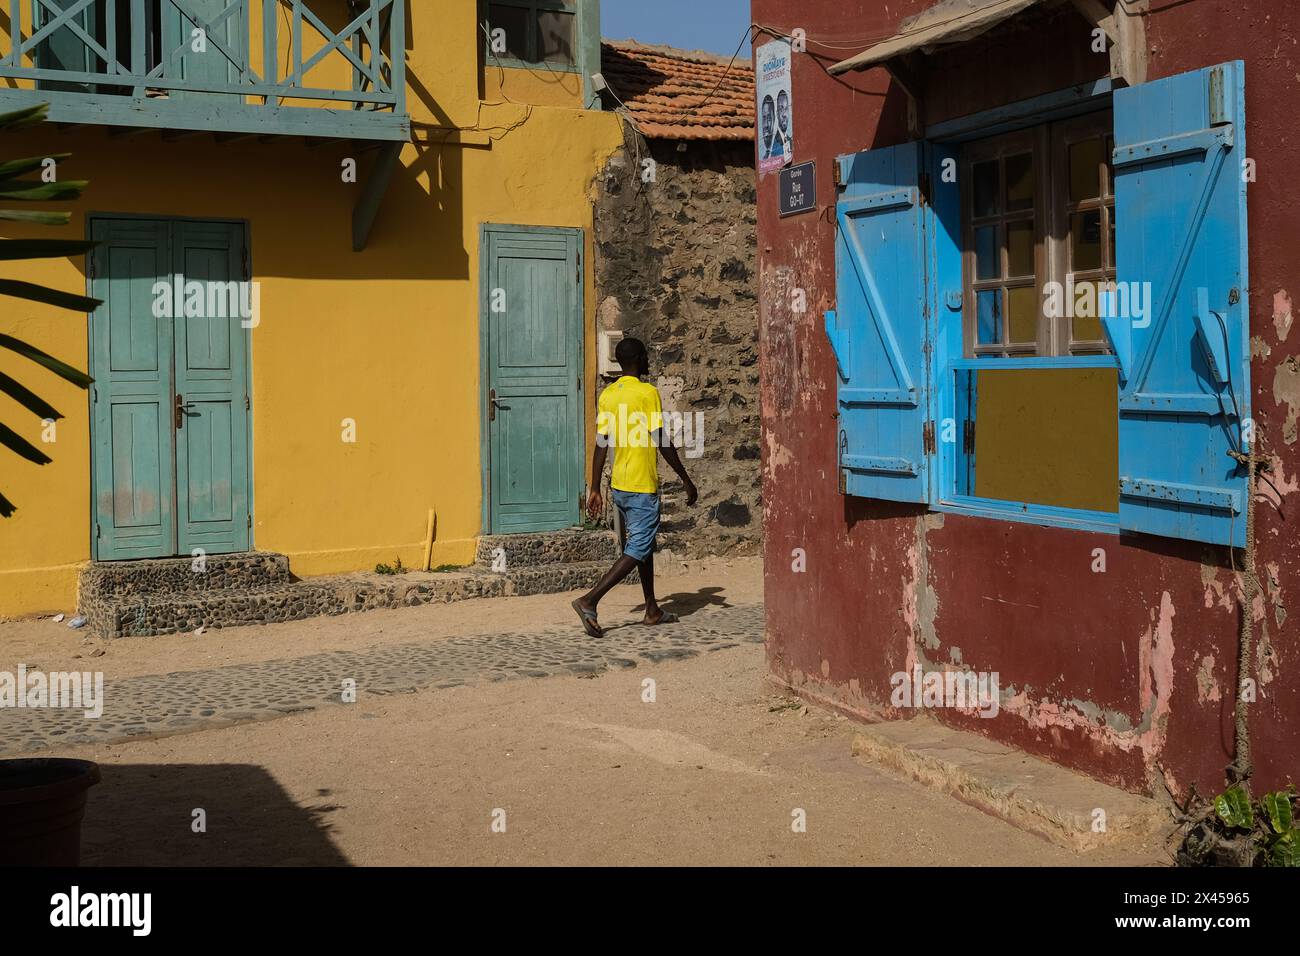 Nicolas Remene/Le Pictorium - Ile de Goree au, Senegal. April 2024. Senegal/Dakar/Goree Island - typische farbenfrohe Häuser und Gassen in Goree, Senegal, 23. April 2024. Quelle: LE PICTORIUM/Alamy Live News Stockfoto